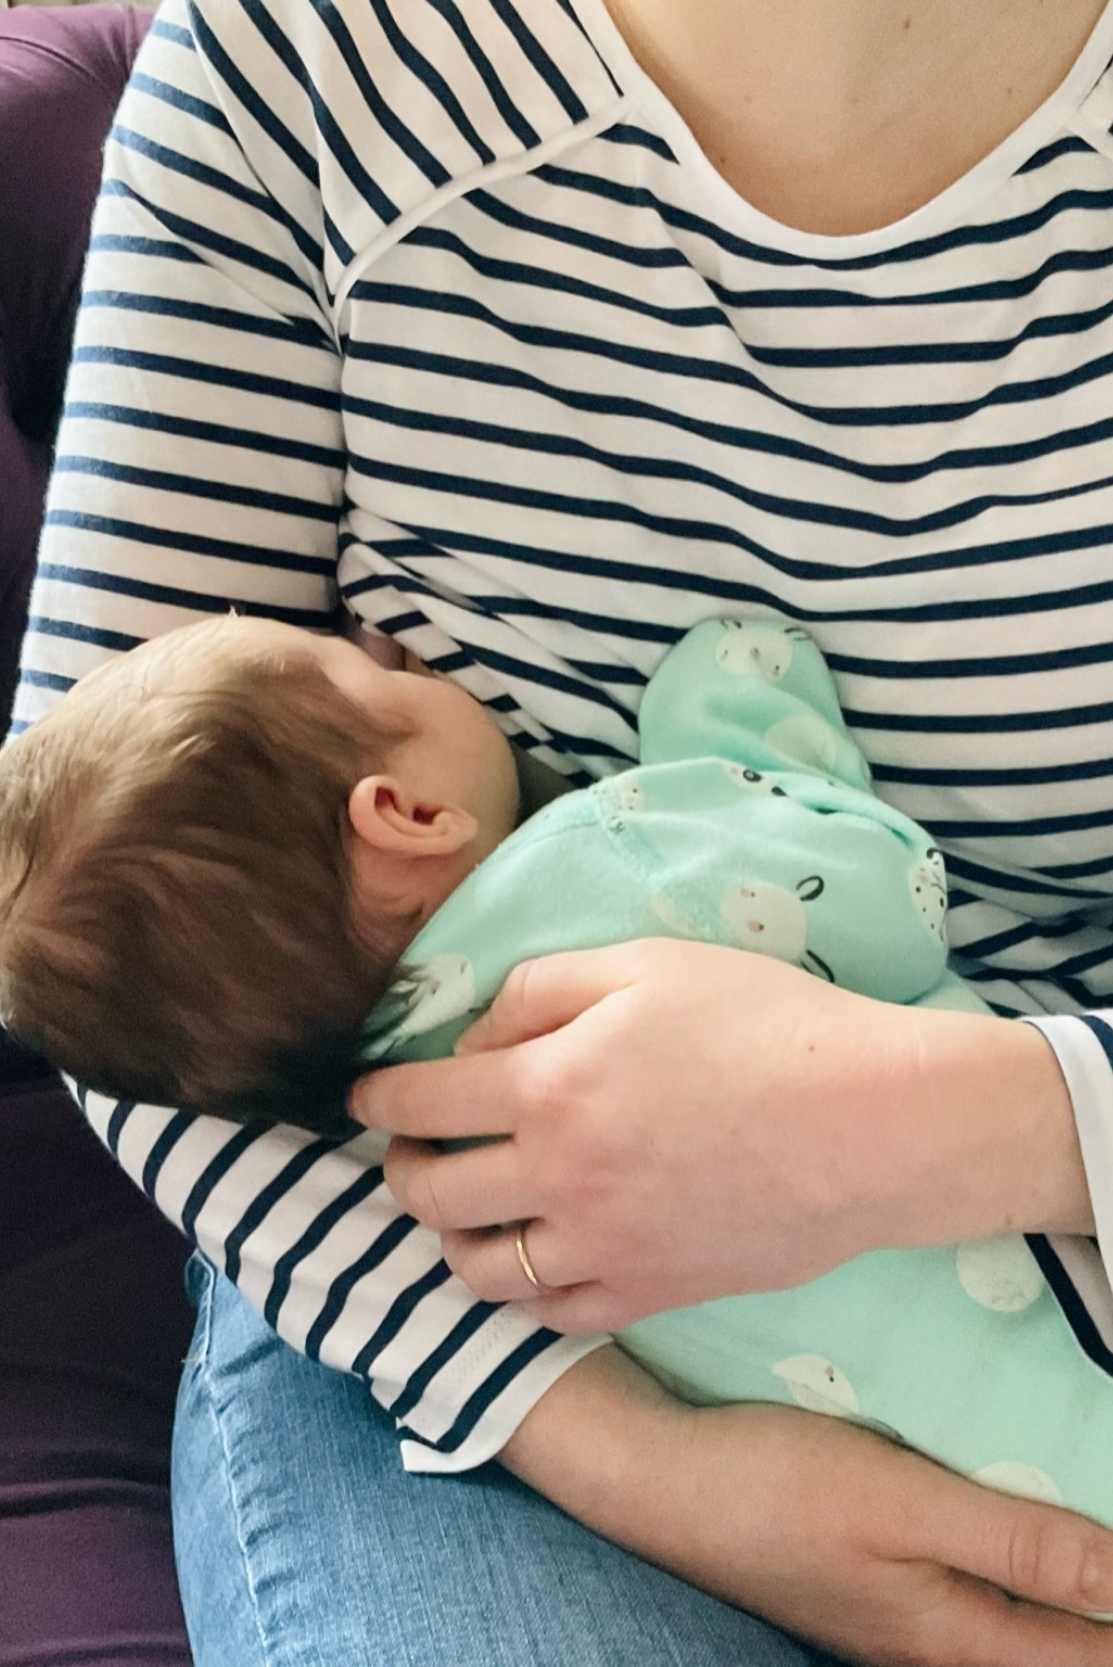 Breton stripes breastfeeding top